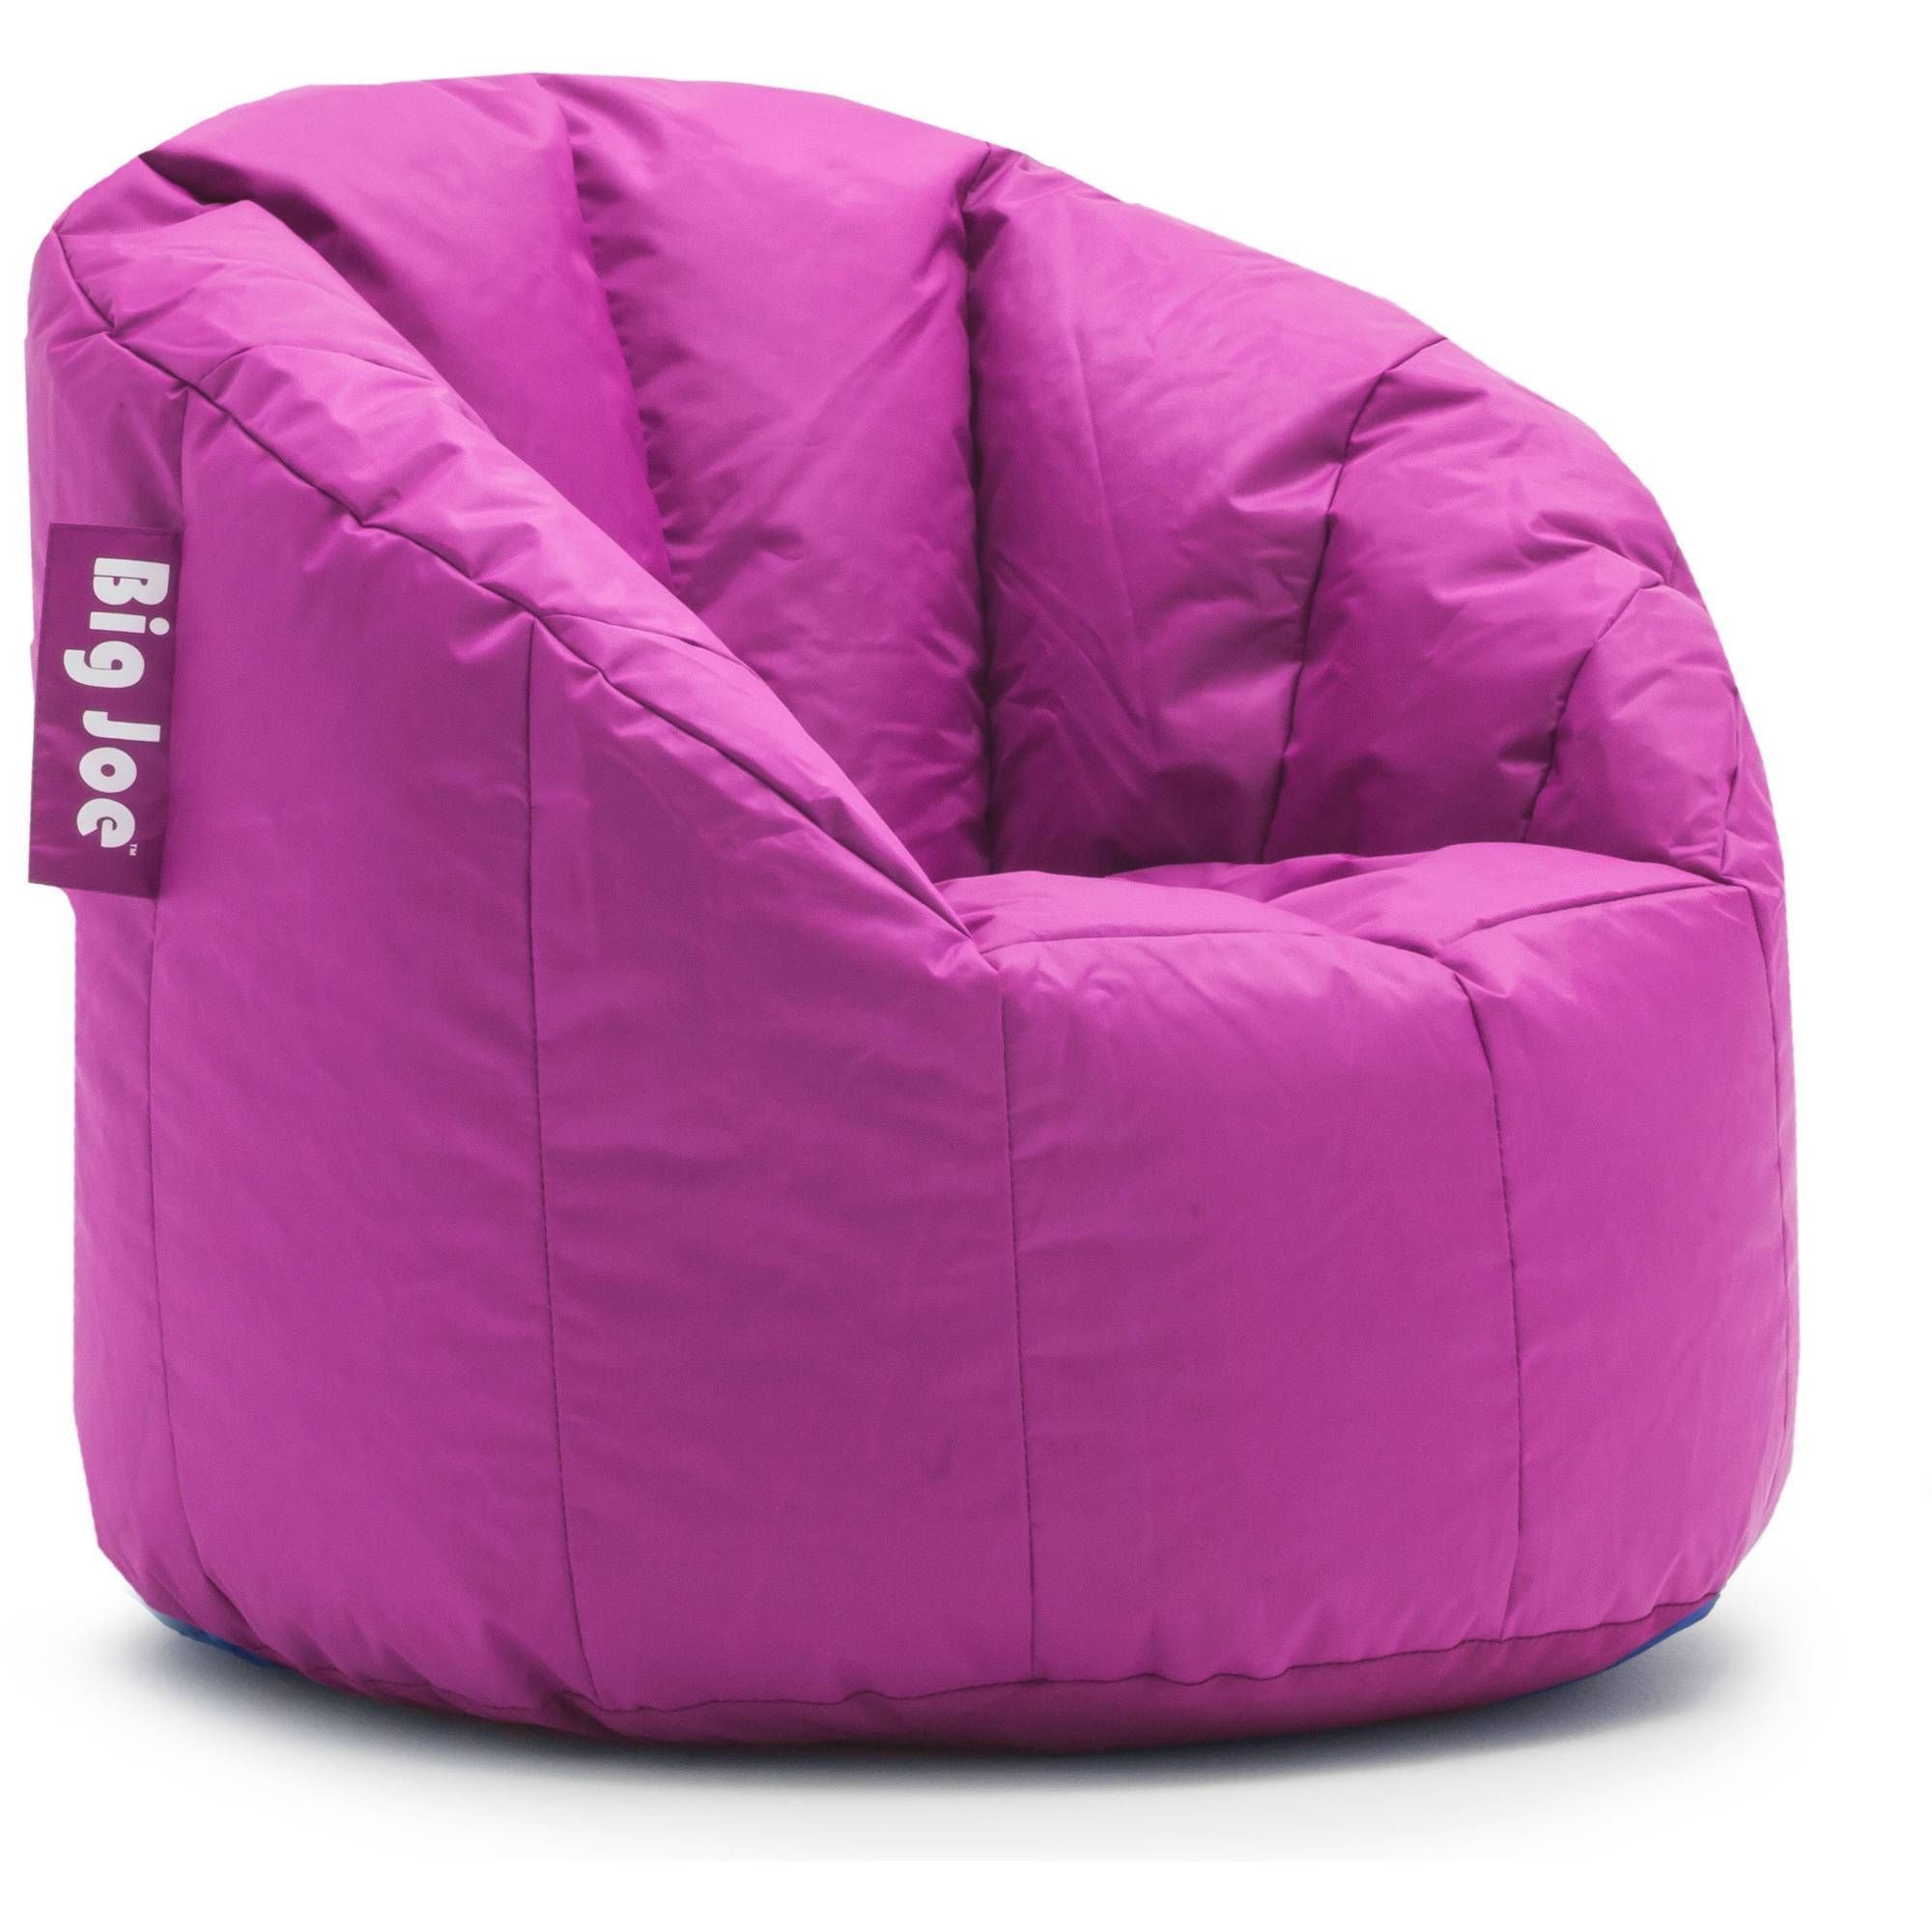 Furniture & Sofa: Fascinating Big Joe Lumin Bean Bag Chair With Throughout Big Joe Sofas (View 14 of 15)